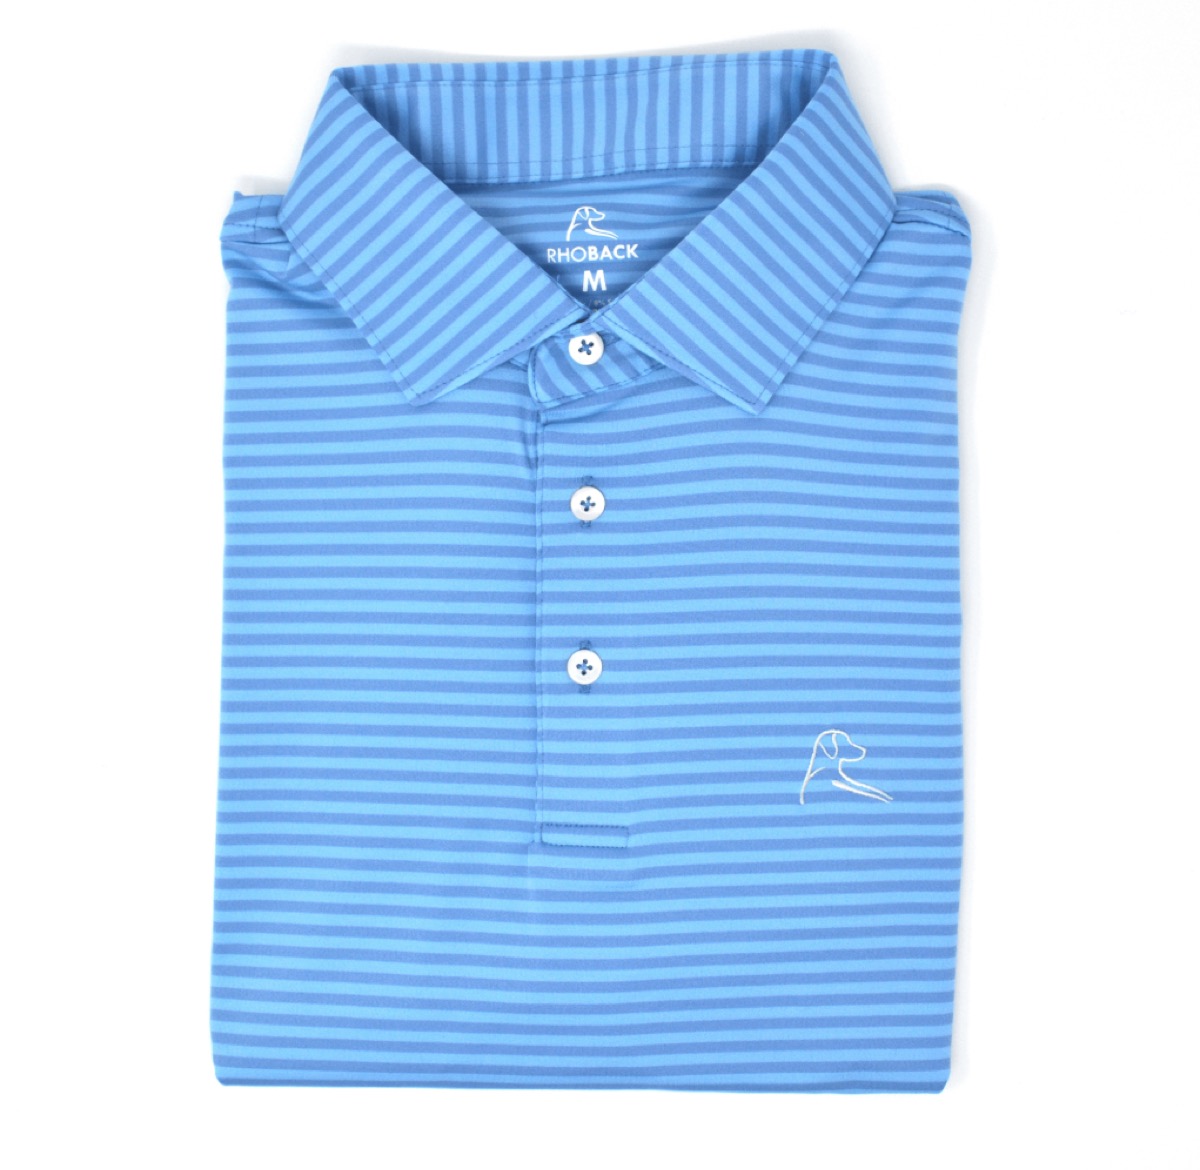 rhoback blue golf shirt